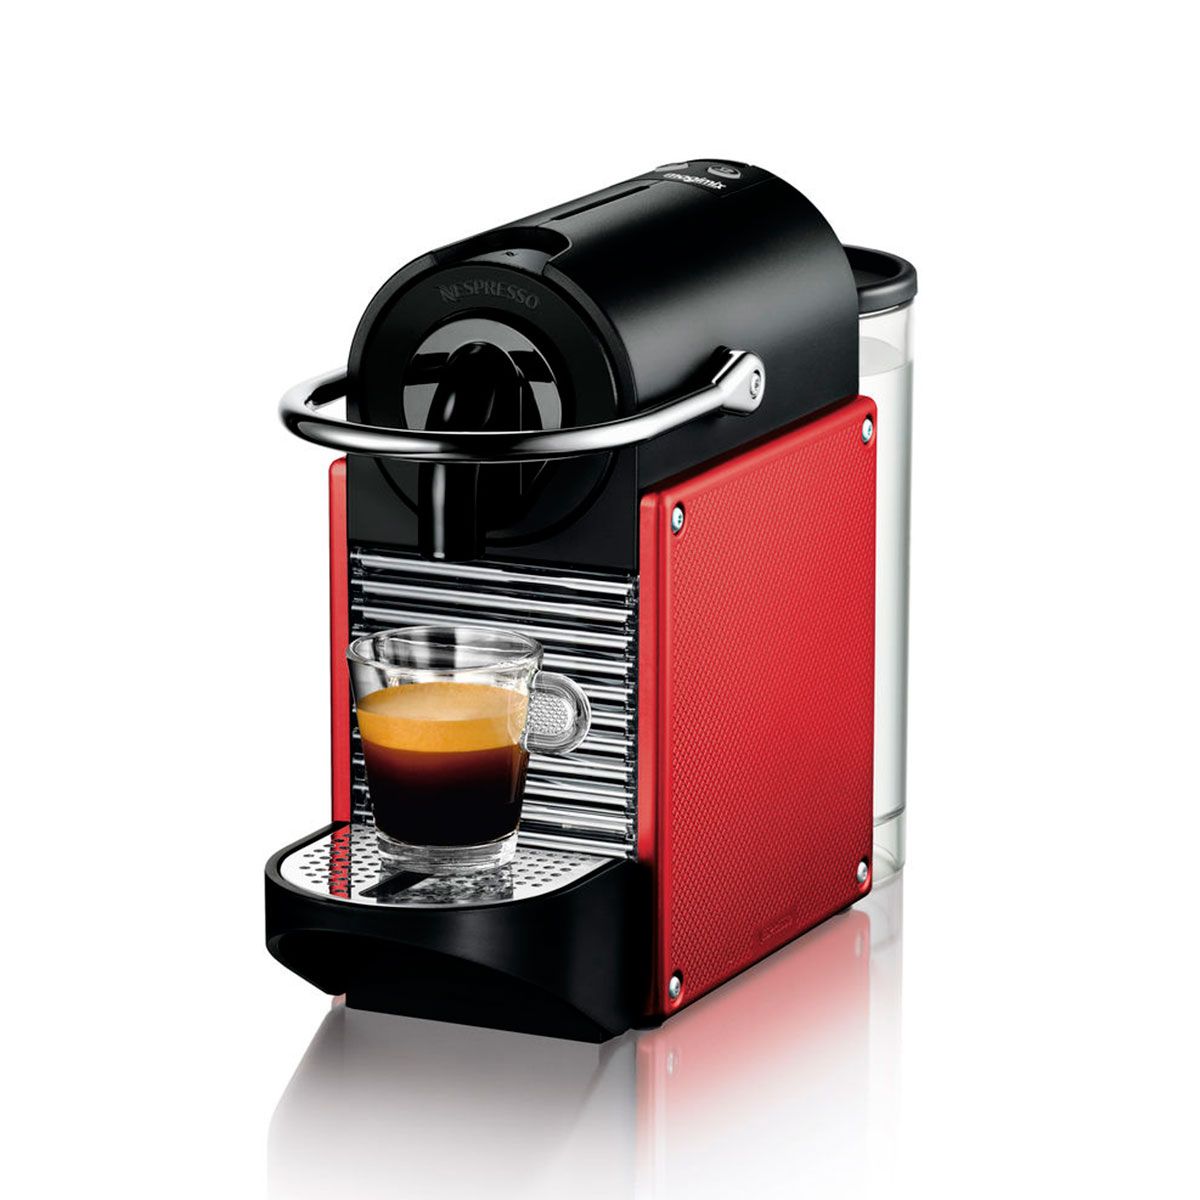 Bergbeklimmer Slapen Het spijt me Magimix Nespresso Pixie M110 Coffee Machine review